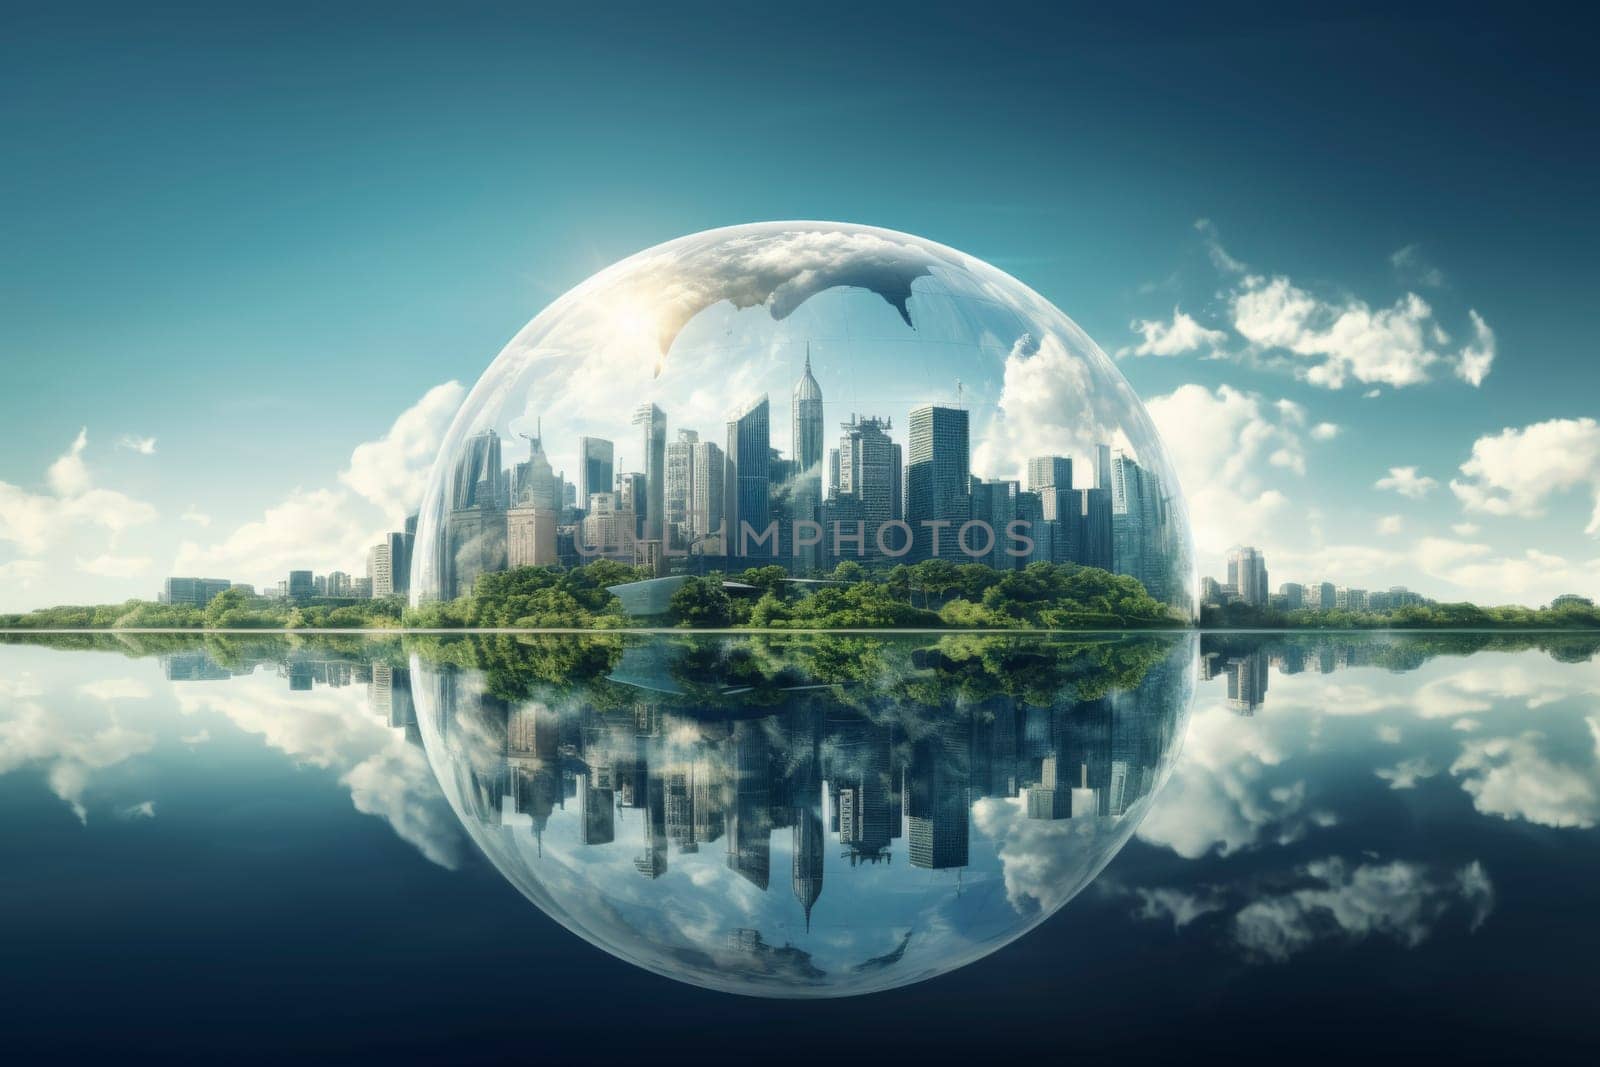 Futuristic City Skyline Inside Transparent Globe by andreyz